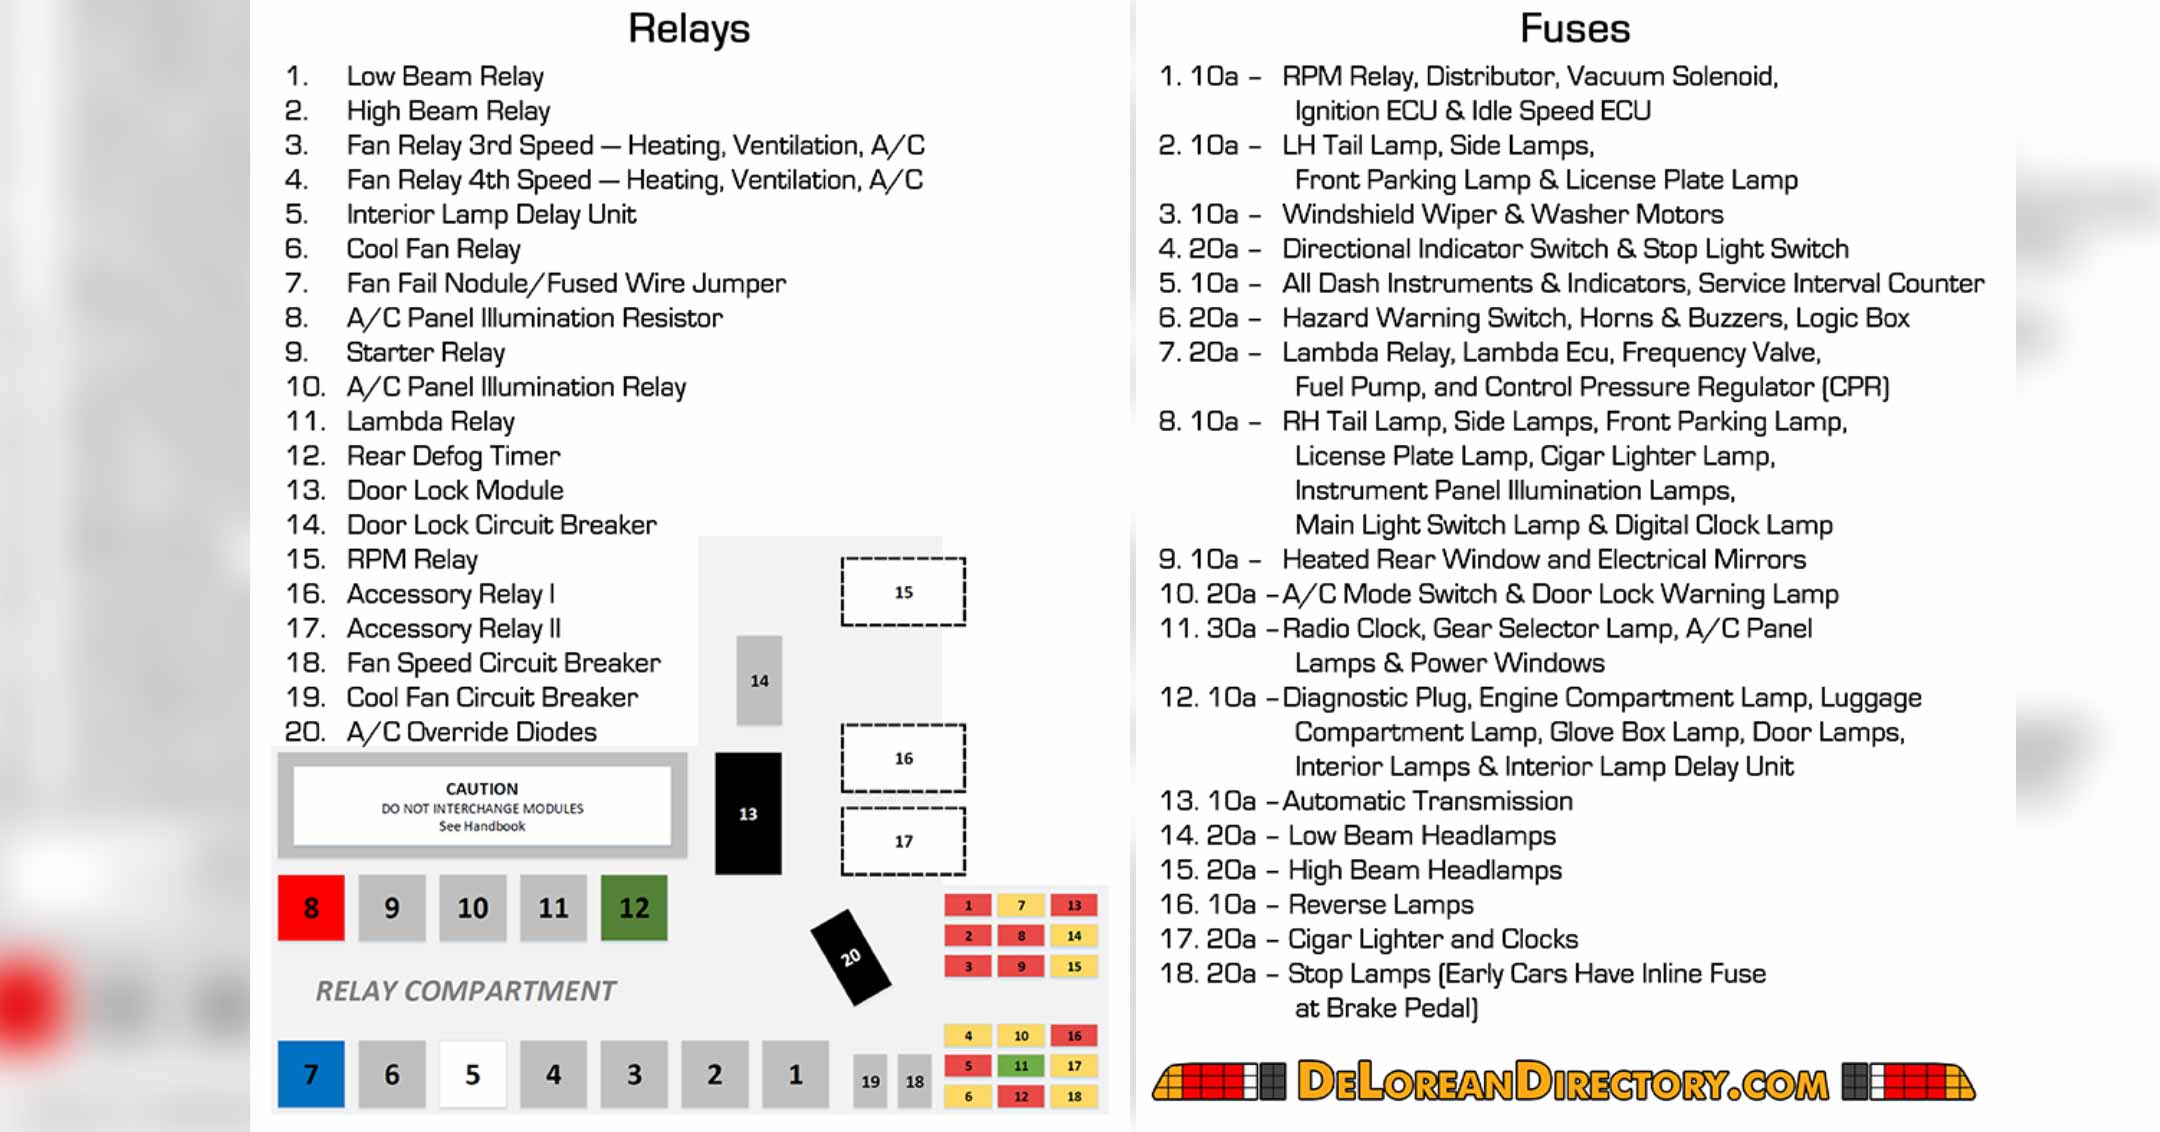 Hi-Resolution DeLorean Relay and Fuse diagram | DeLoreanDirectory.com